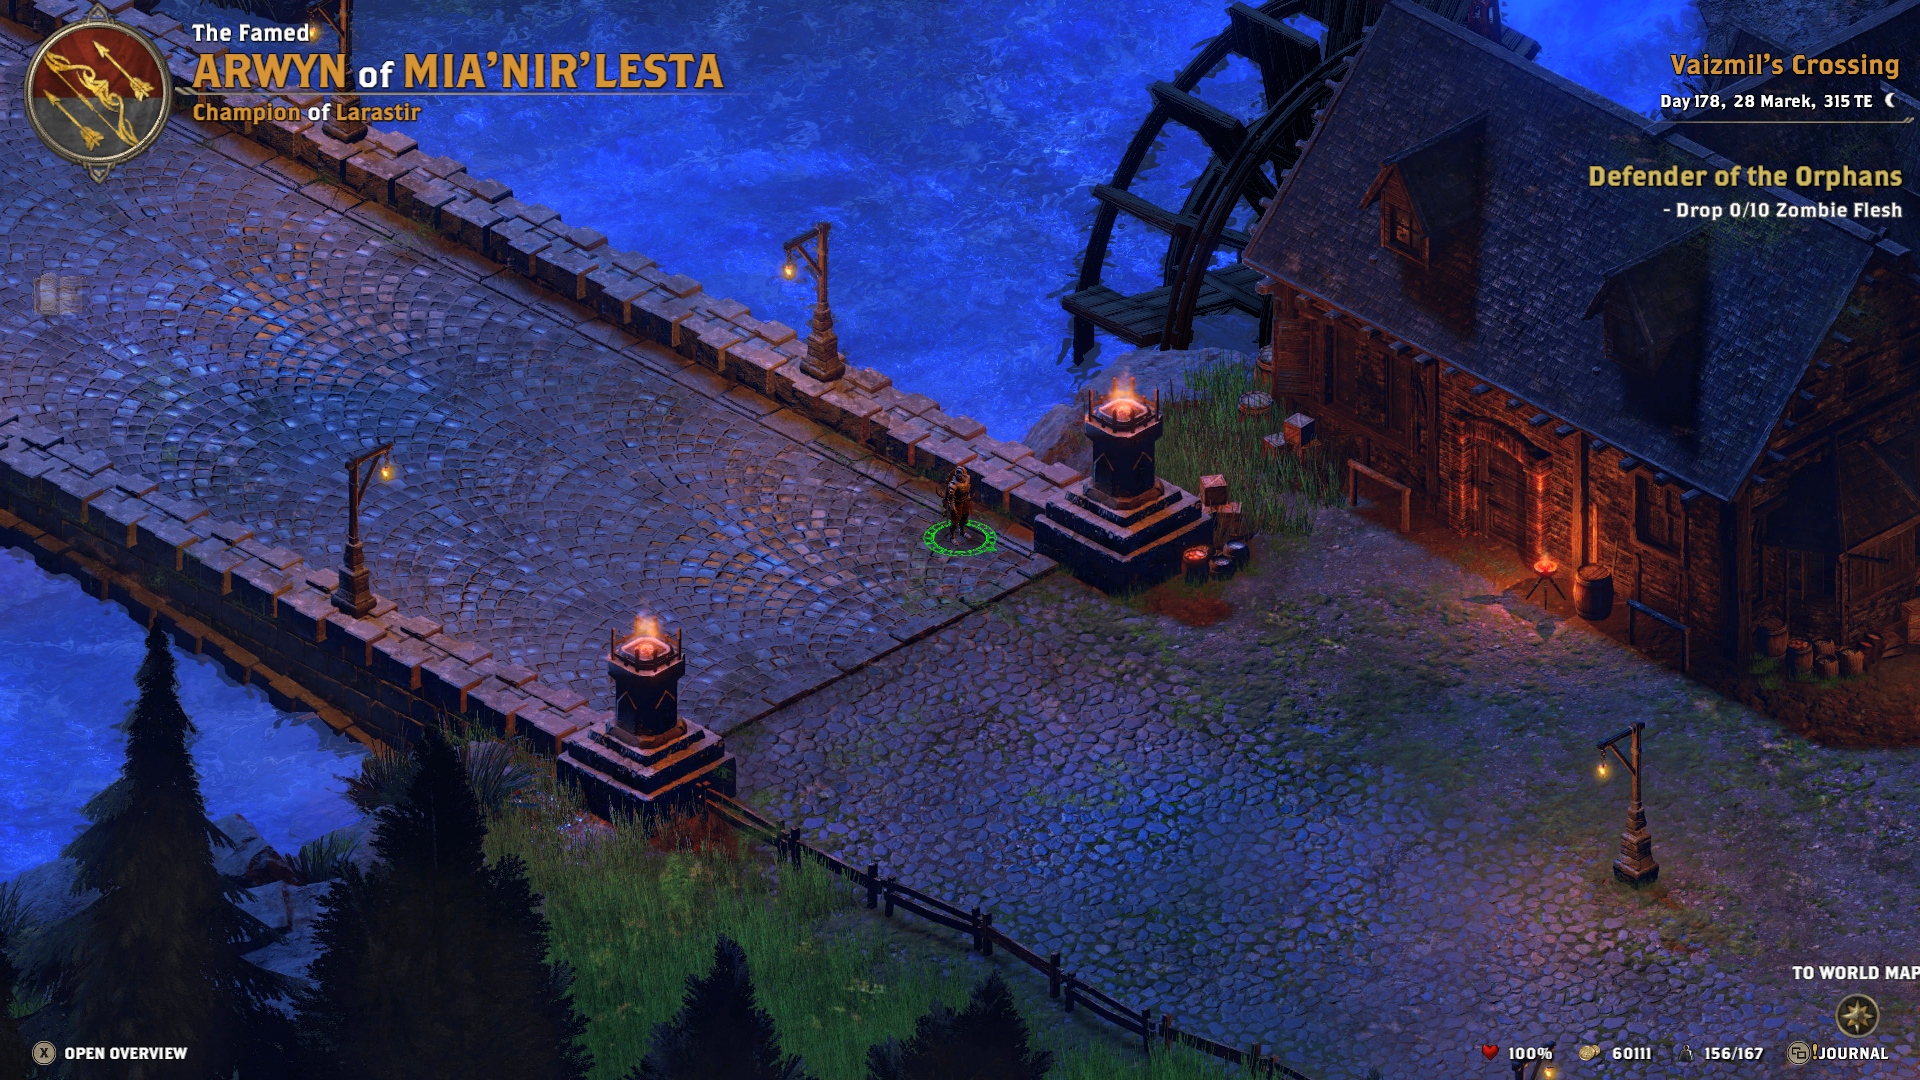 Print Screen de um trecho de gameplay de Alaloth Champions of the Four Kingdoms na região de Vaizmil's Crossing